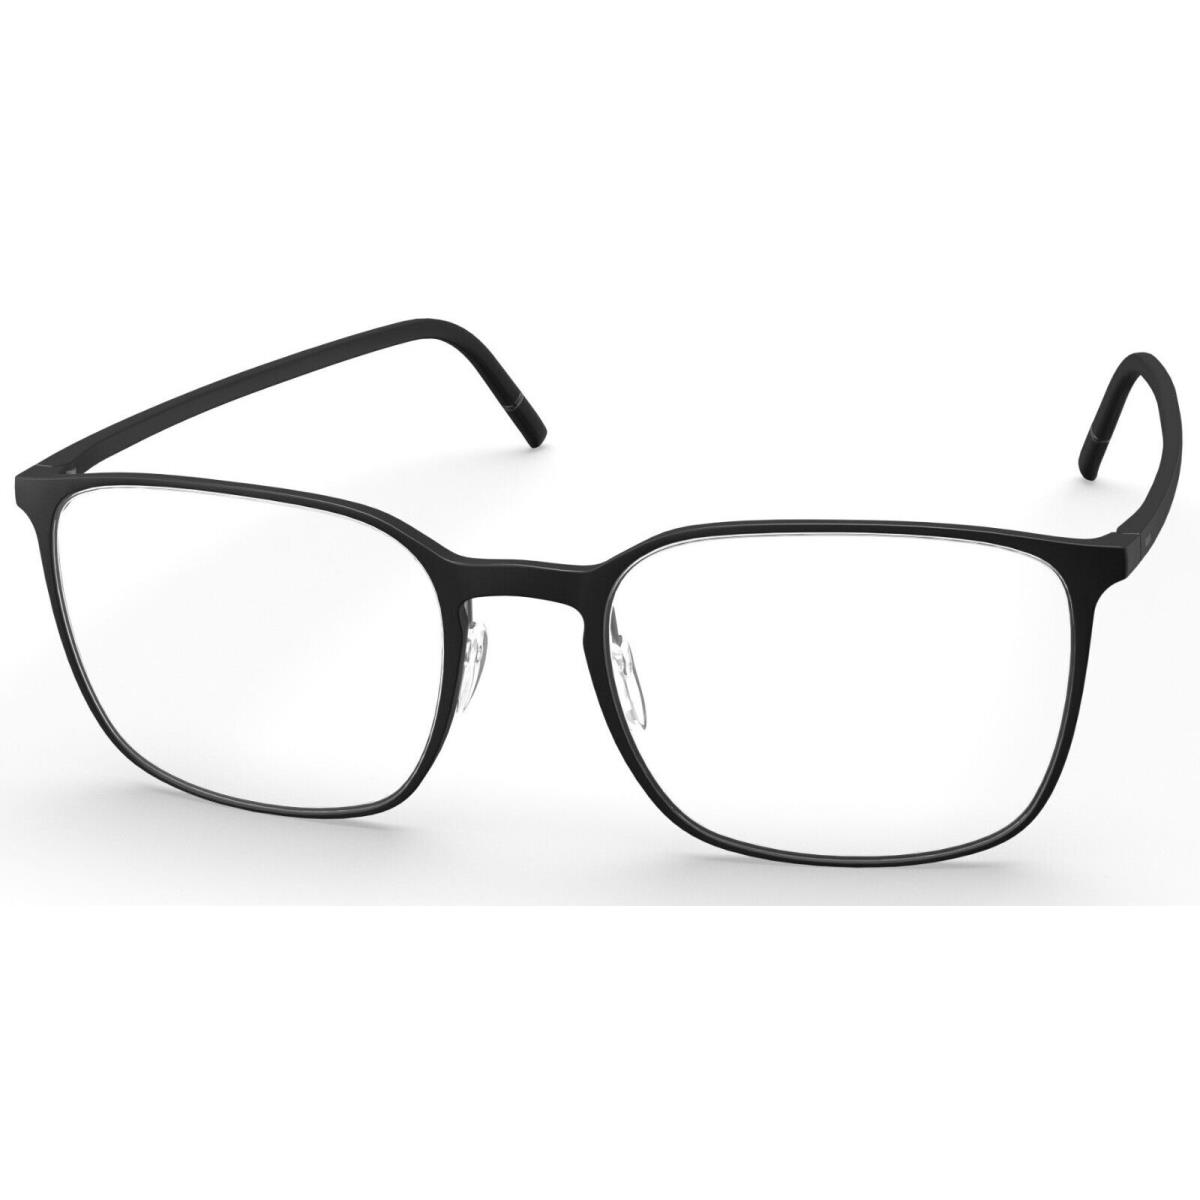 Silhouette Eyeglasses Pure Wave Black Cotton 50MM-19MM-140MM 2954/75-9060-50mm